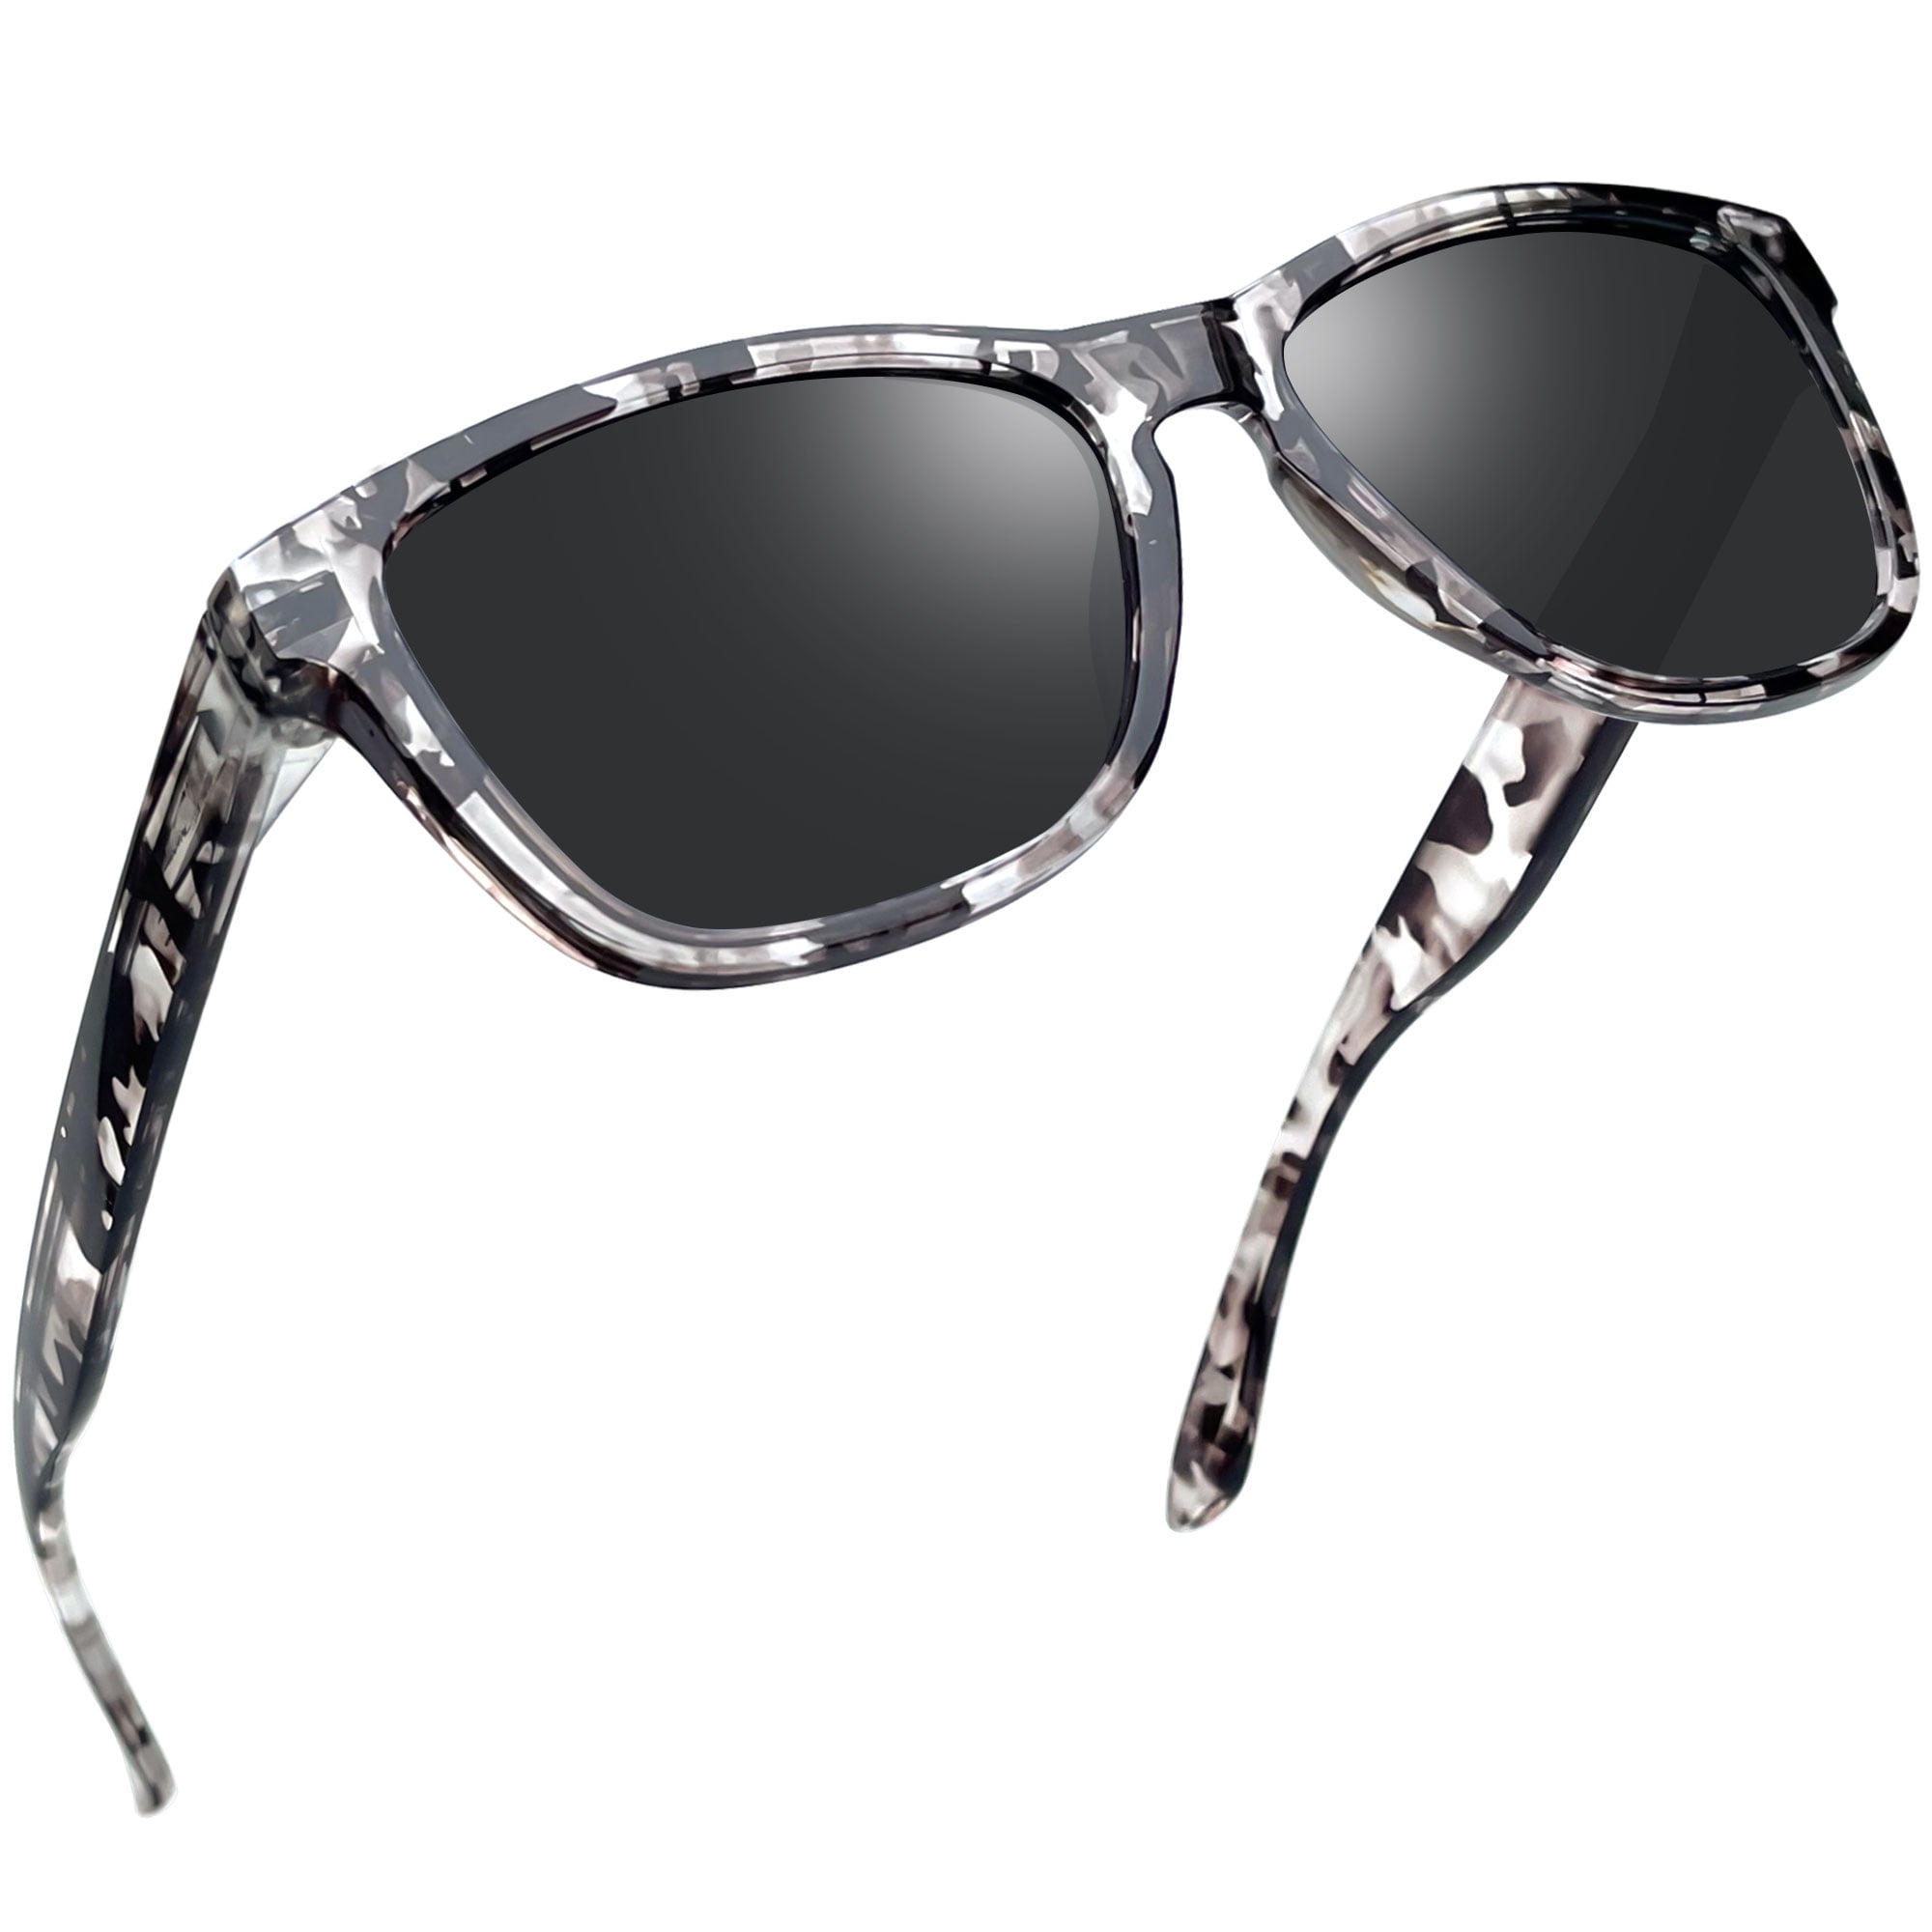 Ziwanule Polarized Aviator Sunglasses for Men/Women Metal Mens Sunglasses Driving Sun Glasses